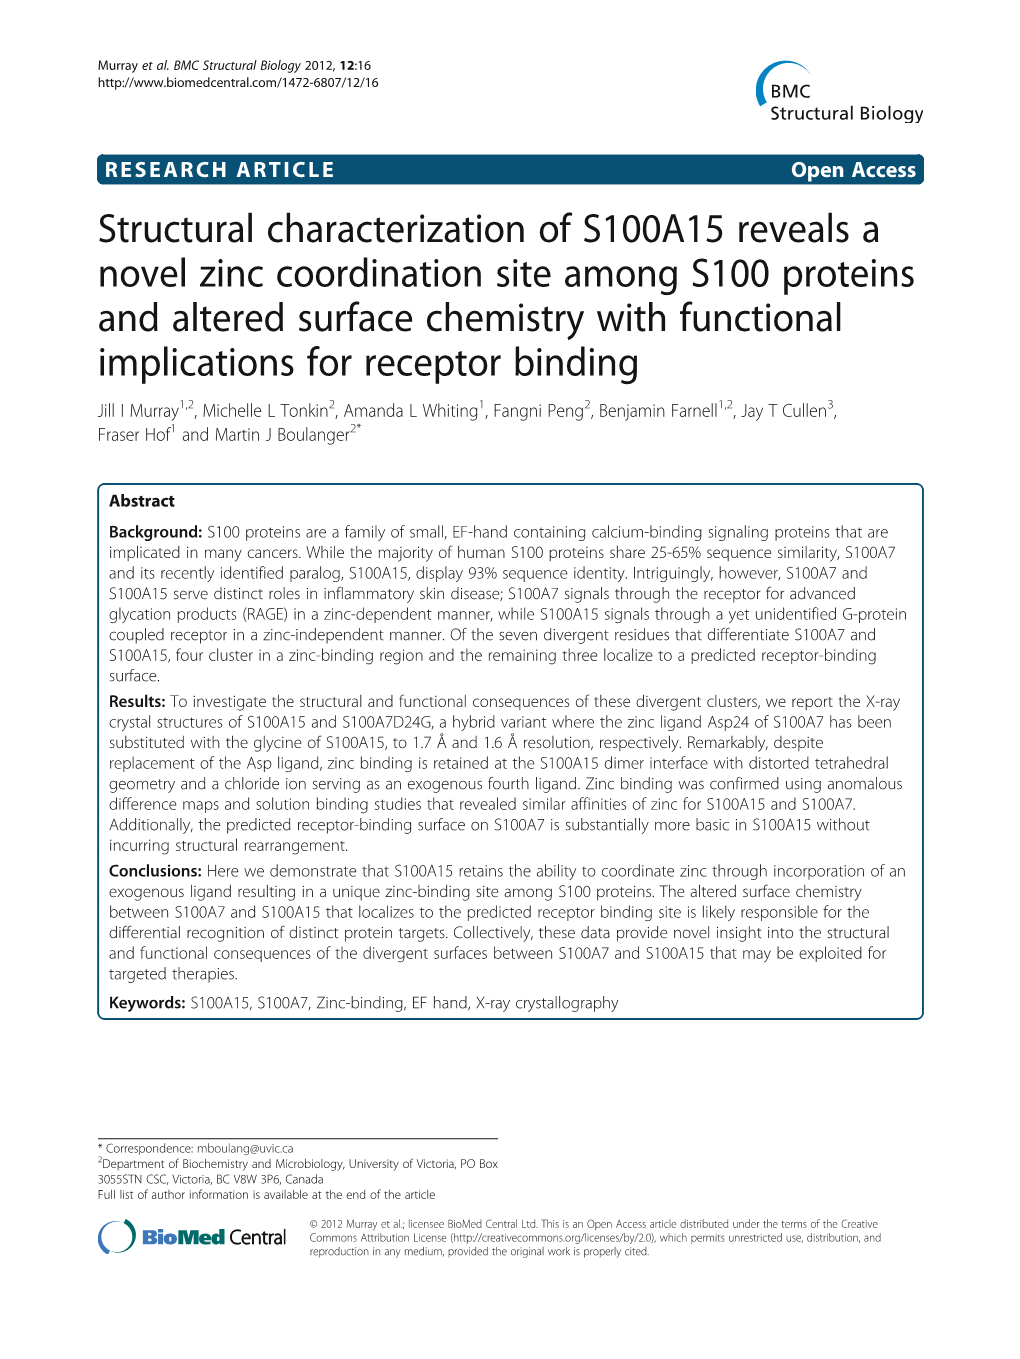 Structural Characterization of S100A15 Reveals a Novel Zinc Coordination